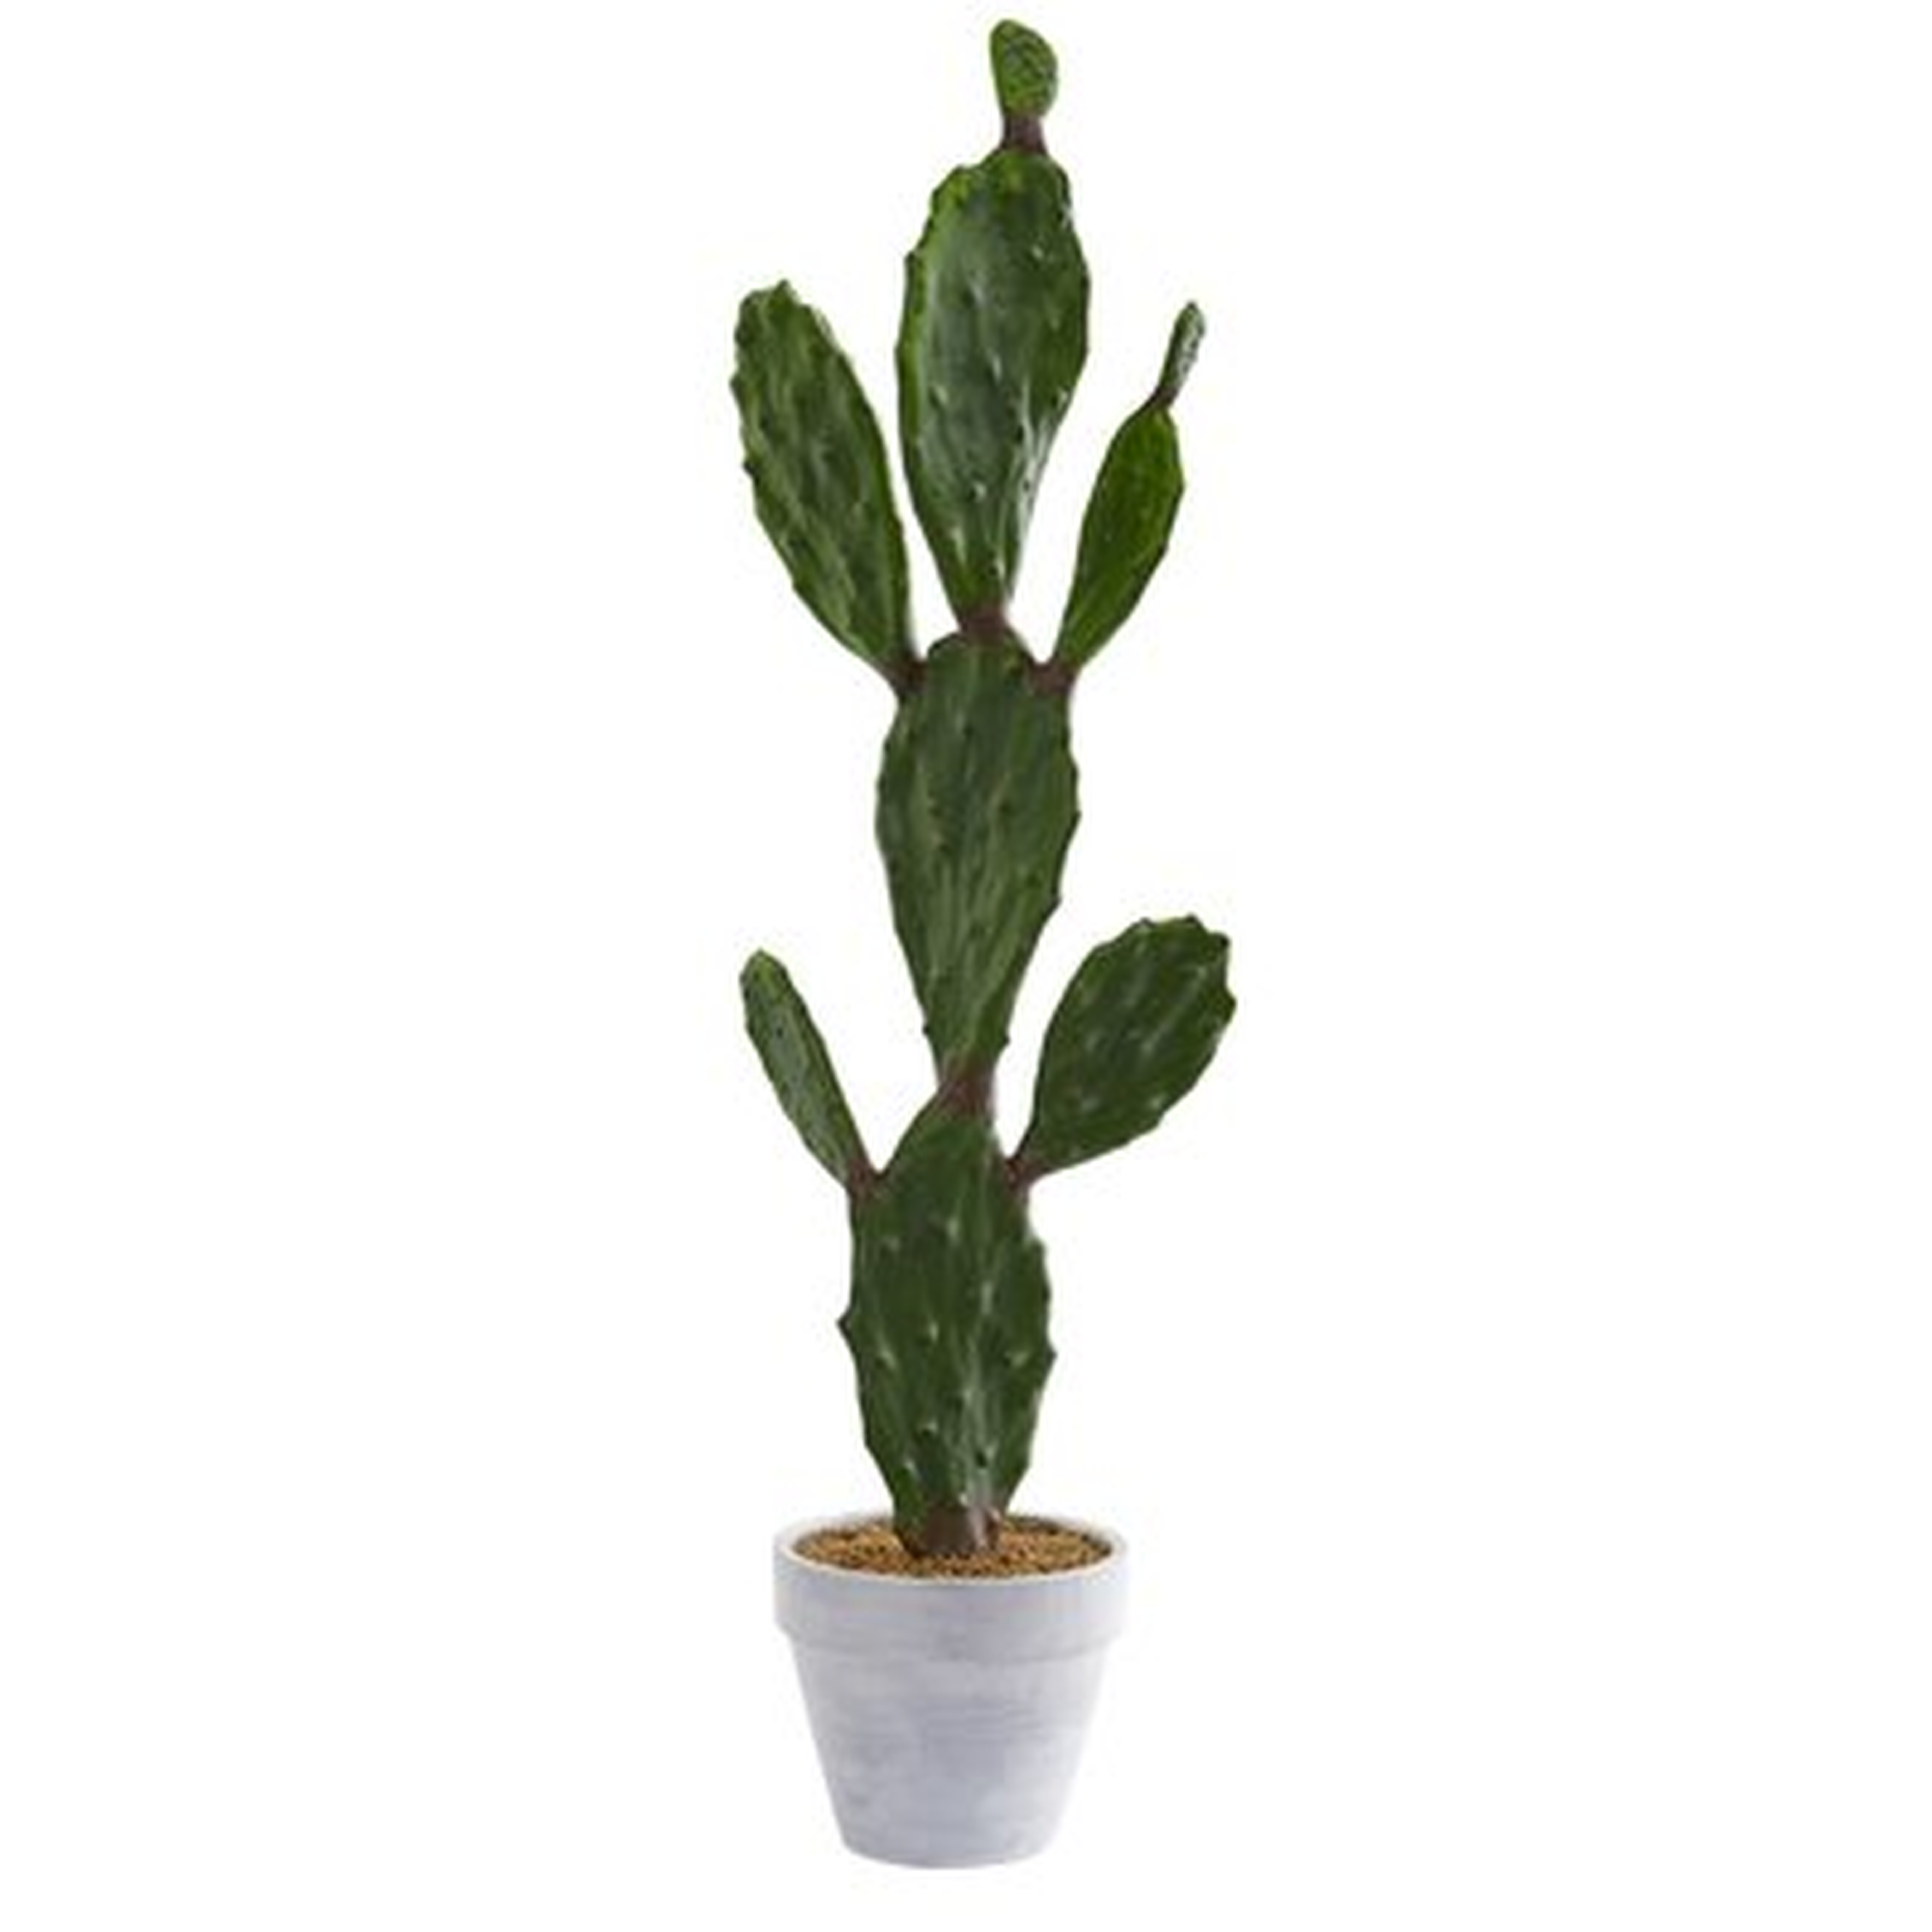 Artificial Cactus Plant in Pot - Wayfair